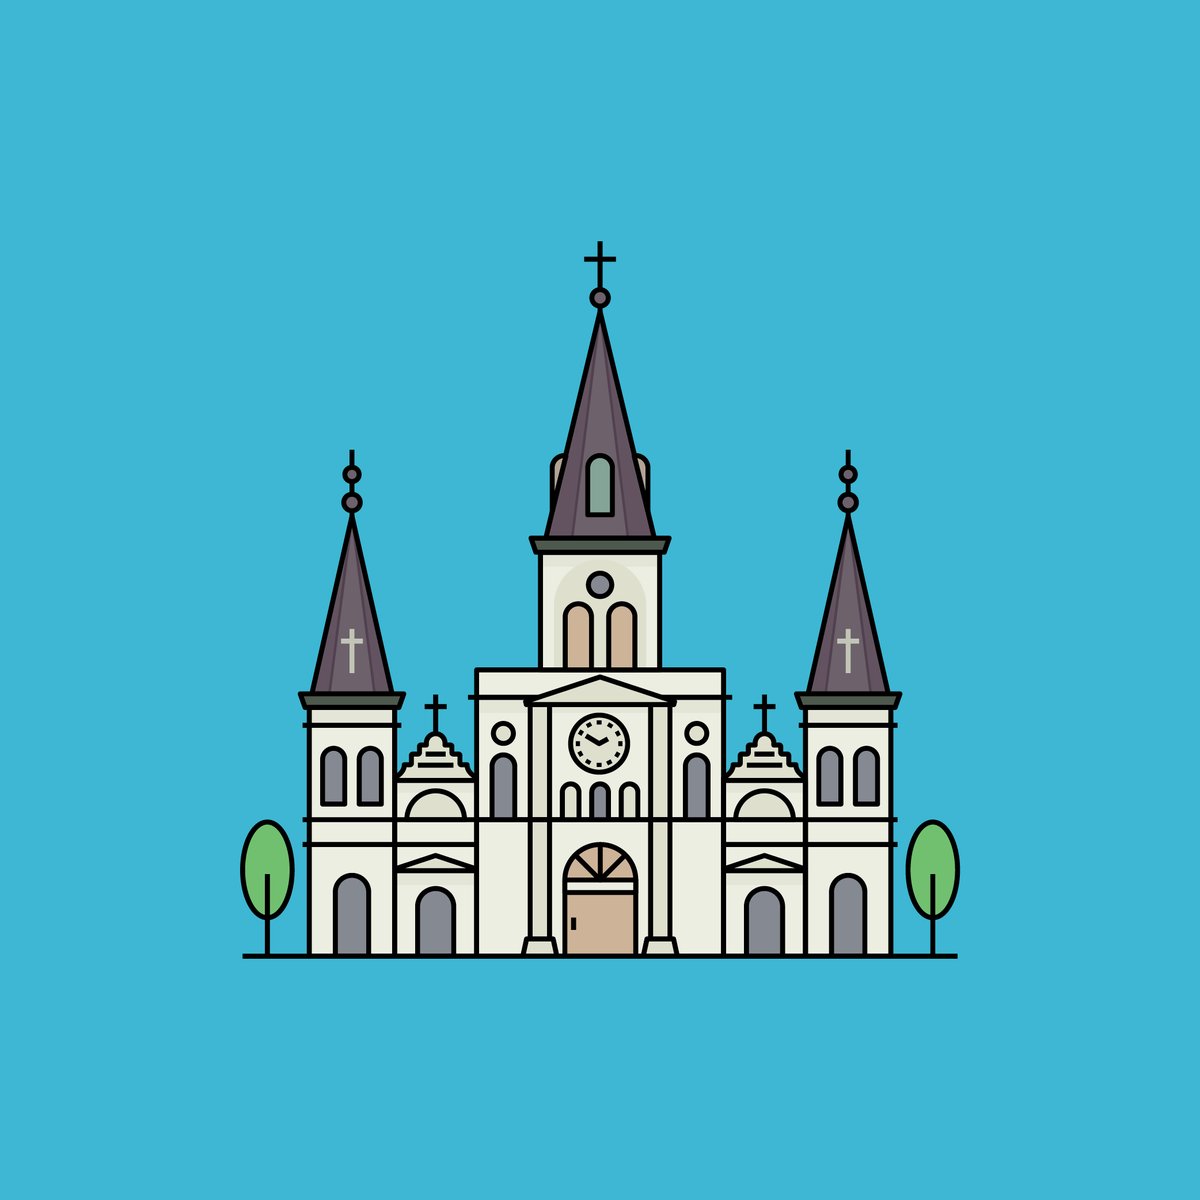 New Orleans Church

#Twitter #twitterx #Like #follow #icon #viral #graphics #design #colors #illustration #vector #art #vectoricon #icondesign #building #famous #landmark #new #orleans #church 

shutterstock.com/g/Rimsha+Ibrar